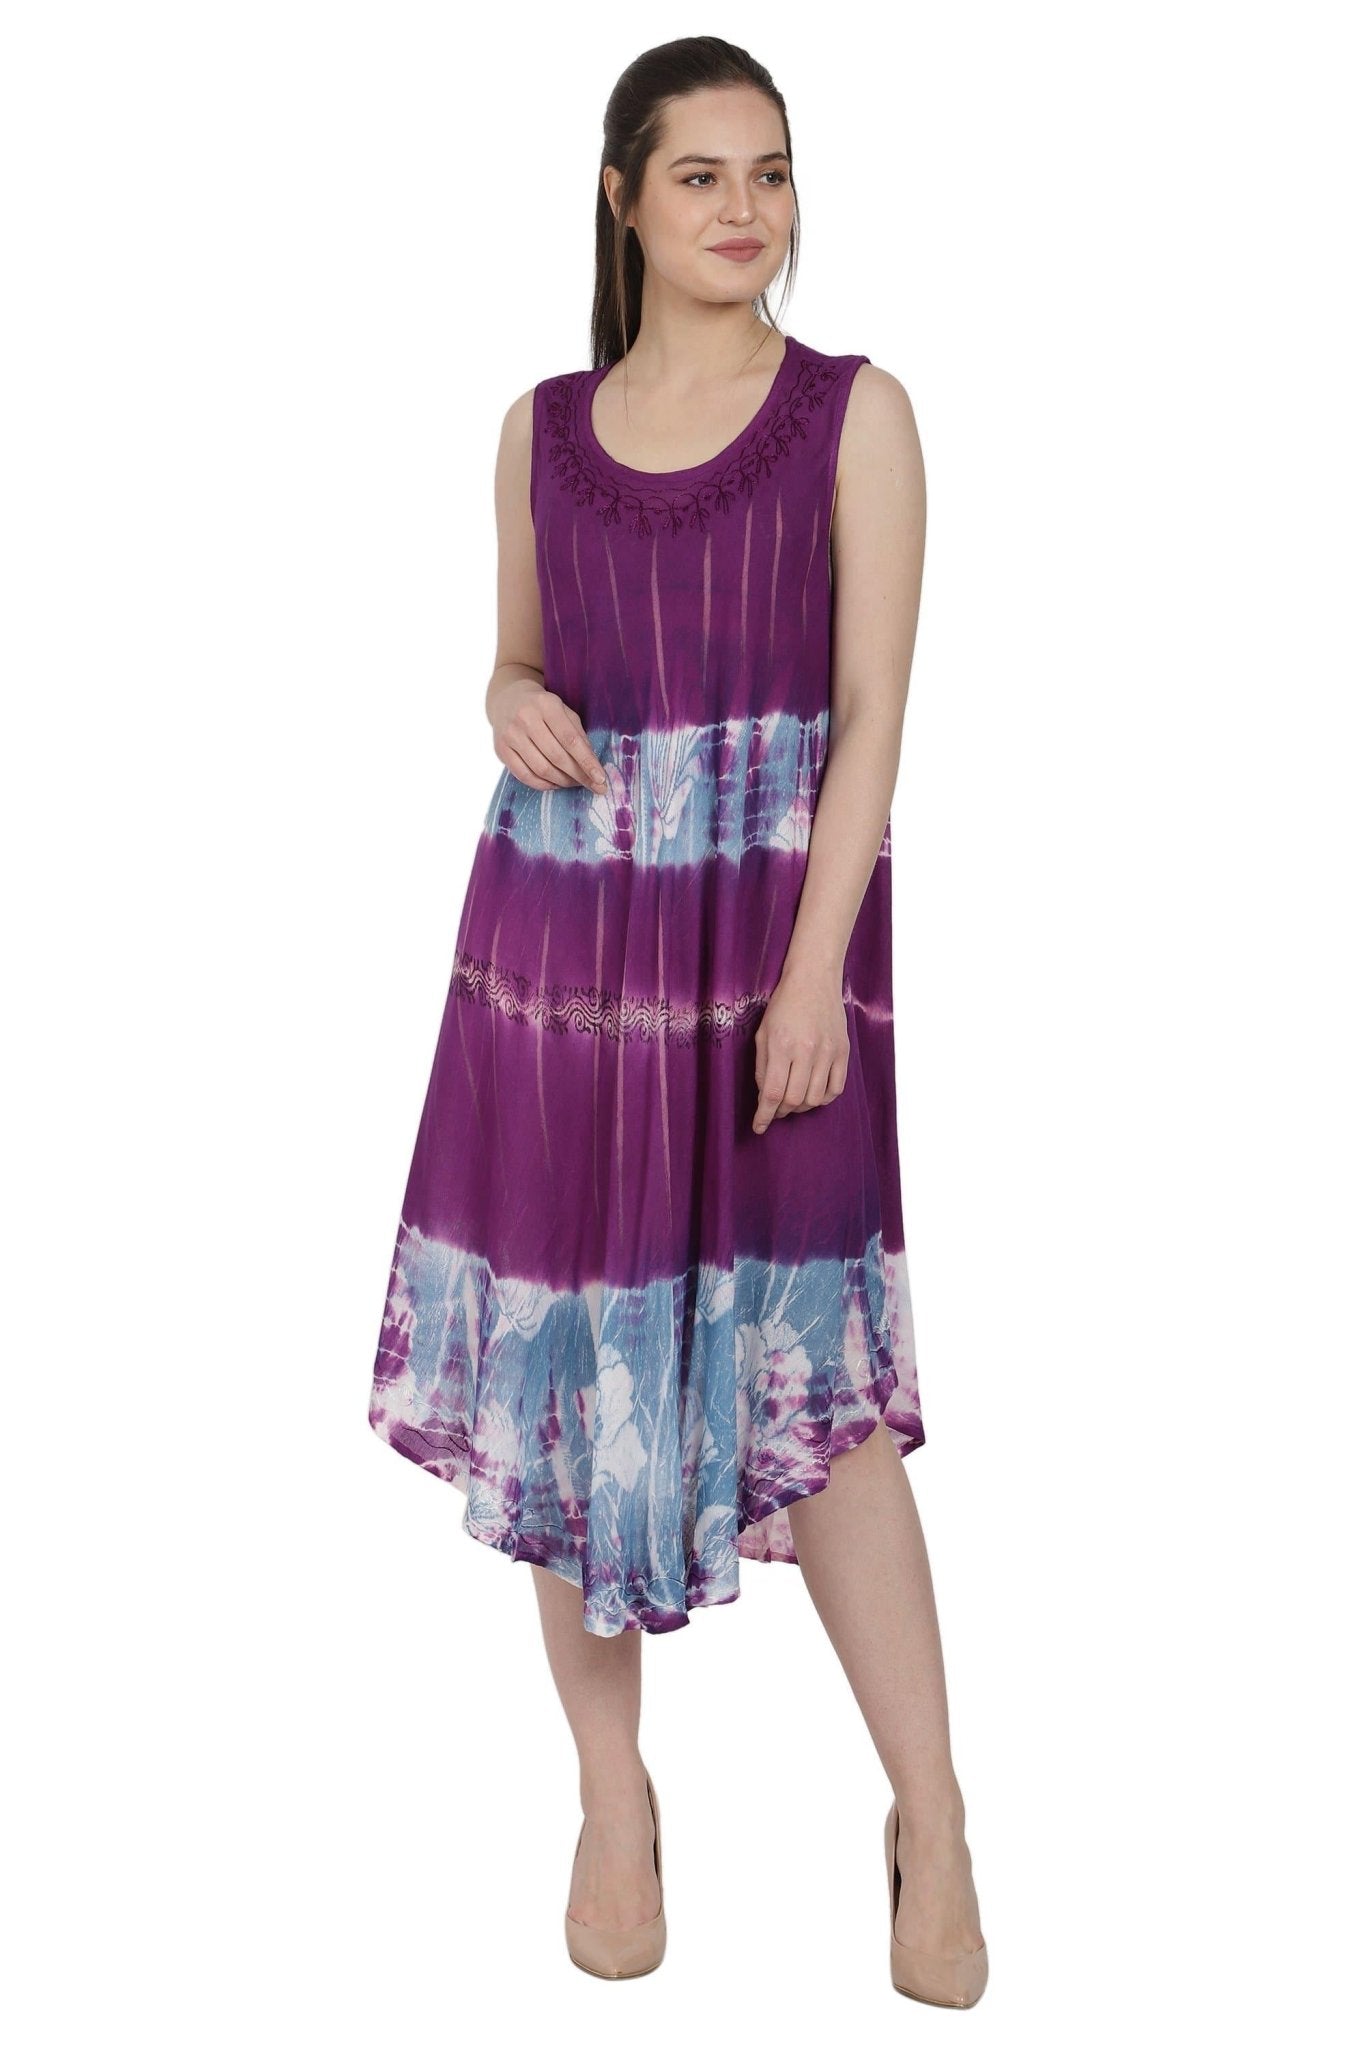 Batik Floral Tie Dye Beach Dress UD48-2308 - Advance Apparels Inc